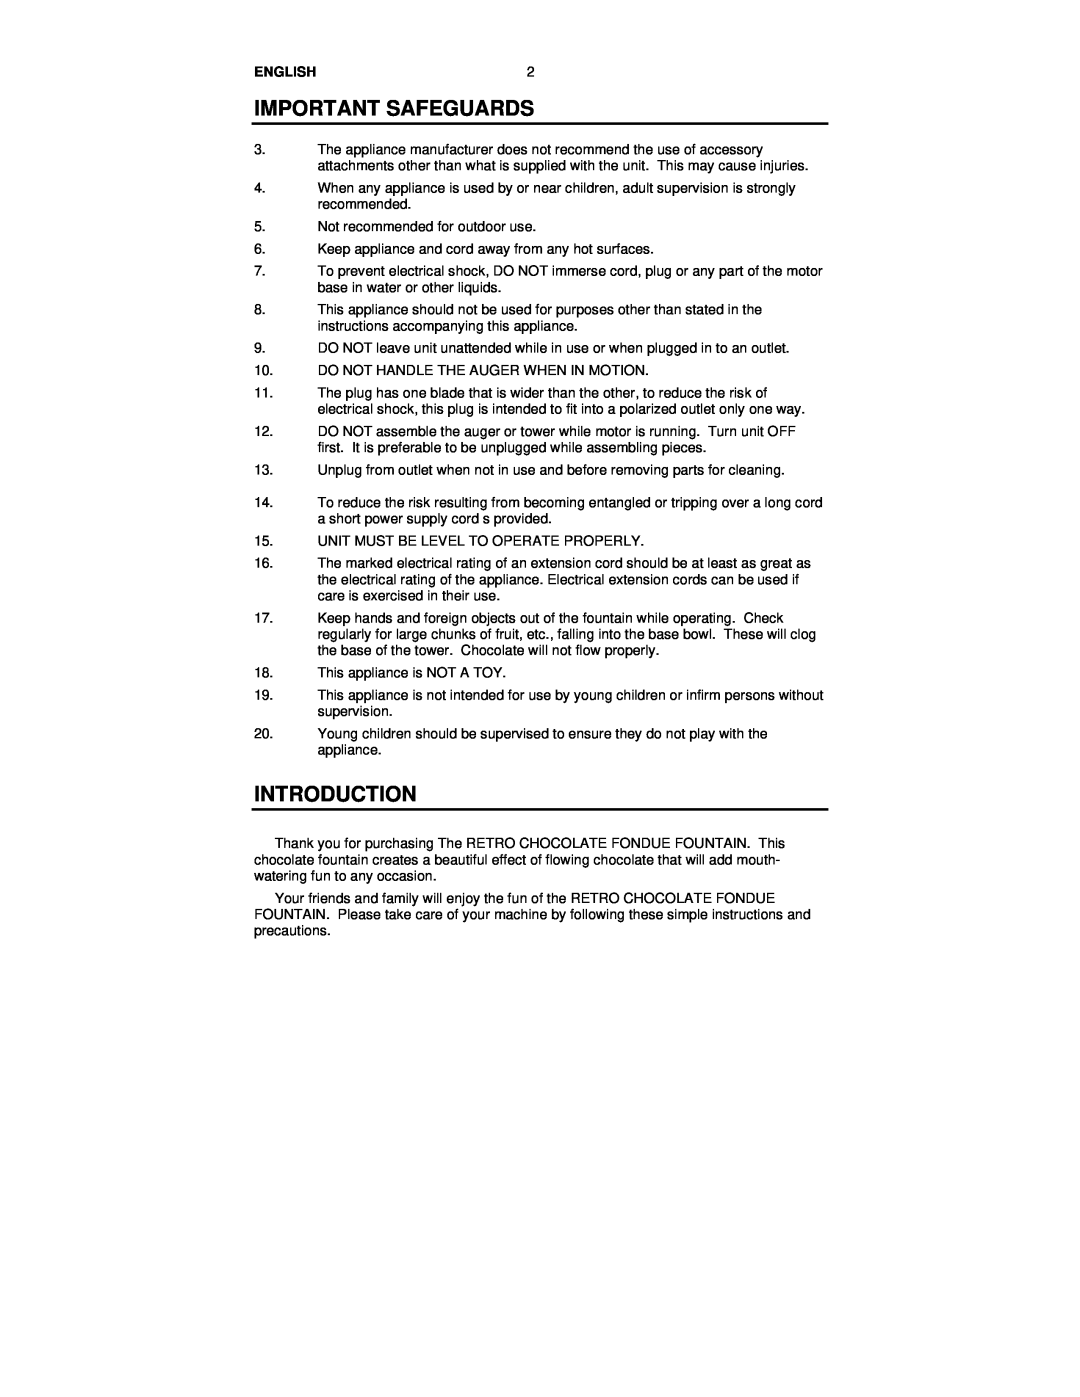 Nostalgia Electrics RFF-500 manual Introduction, ENGLISH2, Important Safeguards 